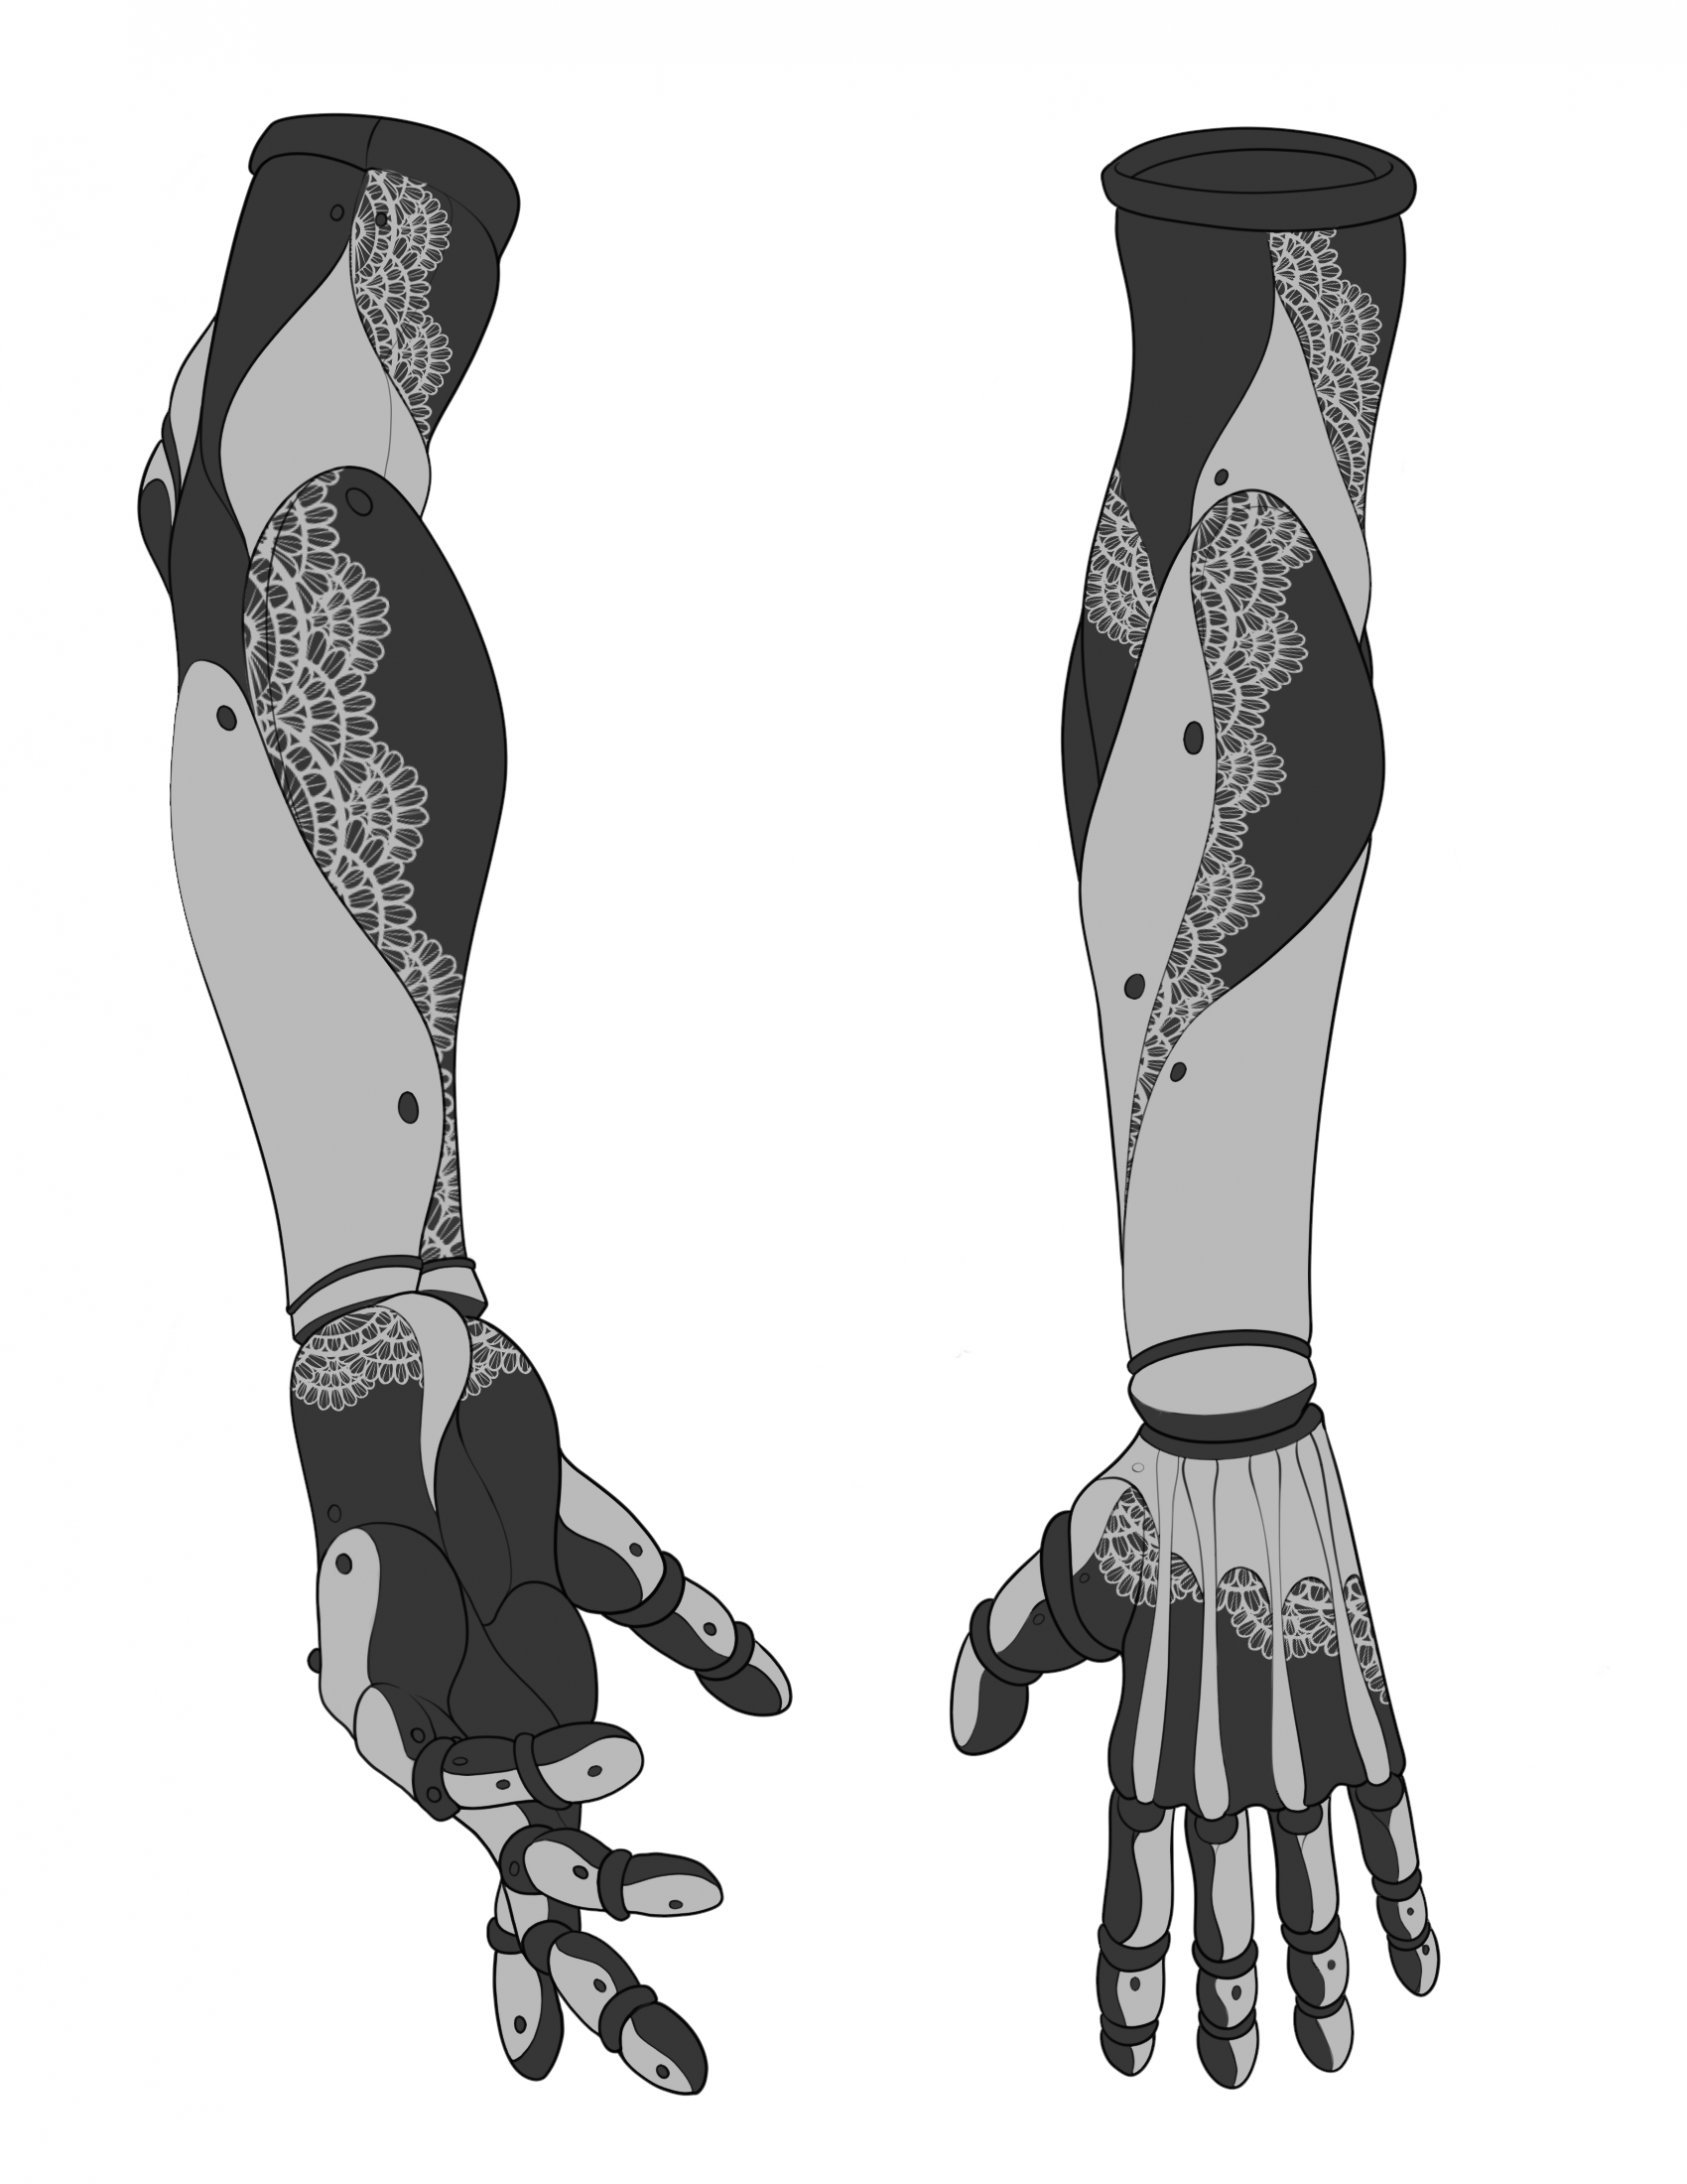 bionic arm drawing